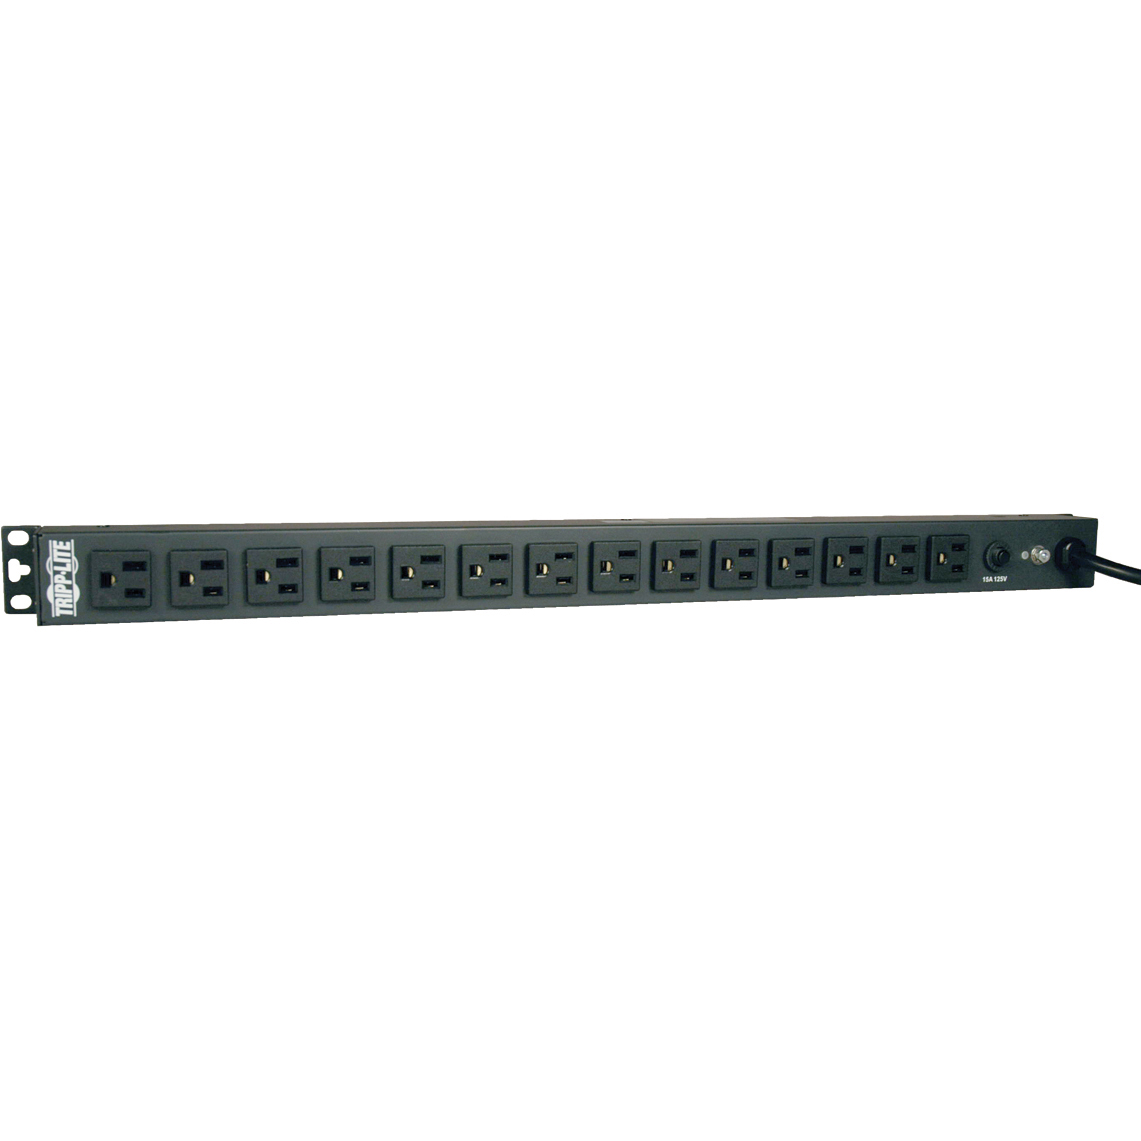 Tripp Lite Basic PDU, 15A, 14 Outlets (5-15R), 120V, 5-15P, 15 ft. Cord, 0U Vertical Rack-Mount Power (PDU1415) - image 2 of 2